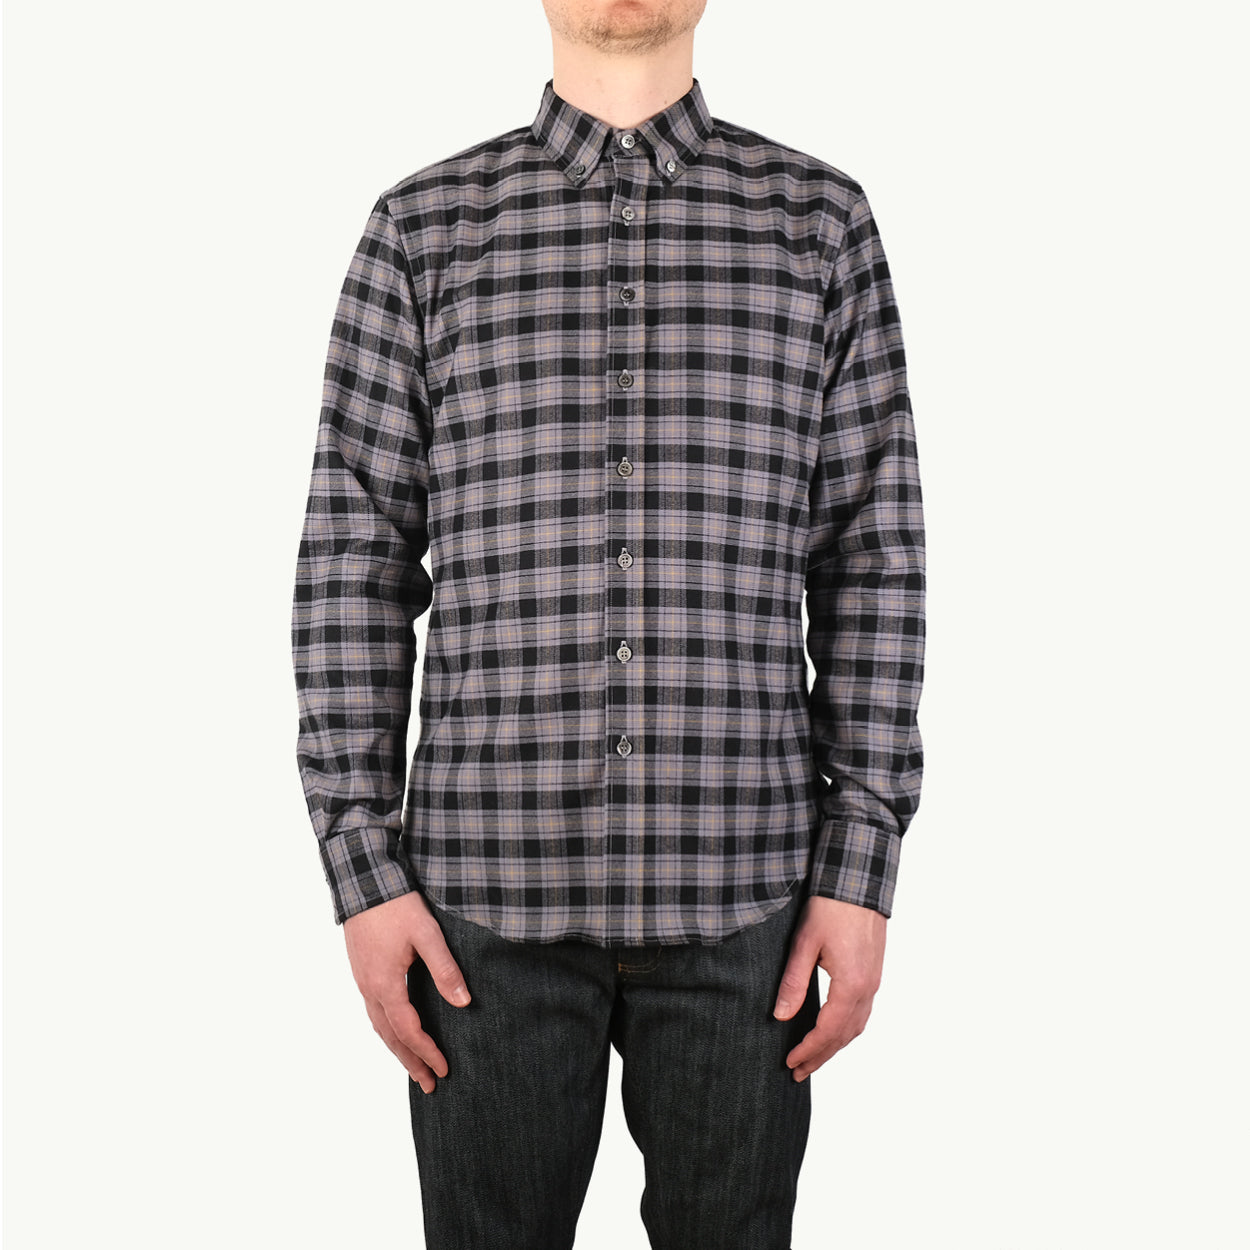 Grey/Black Check Flannel Shirt